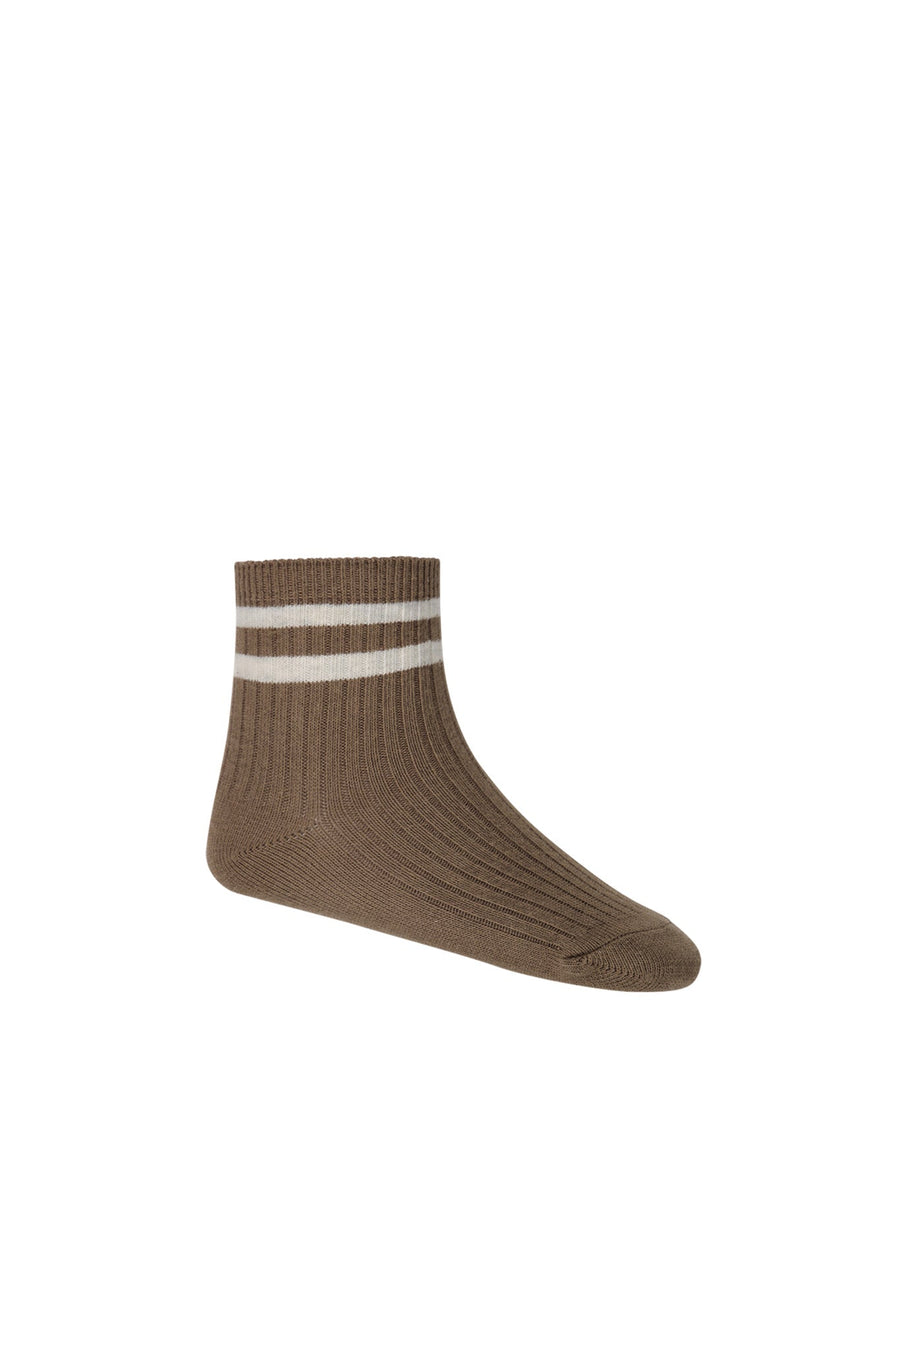 Brayden Sock - Sepia Childrens Sock from Jamie Kay USA